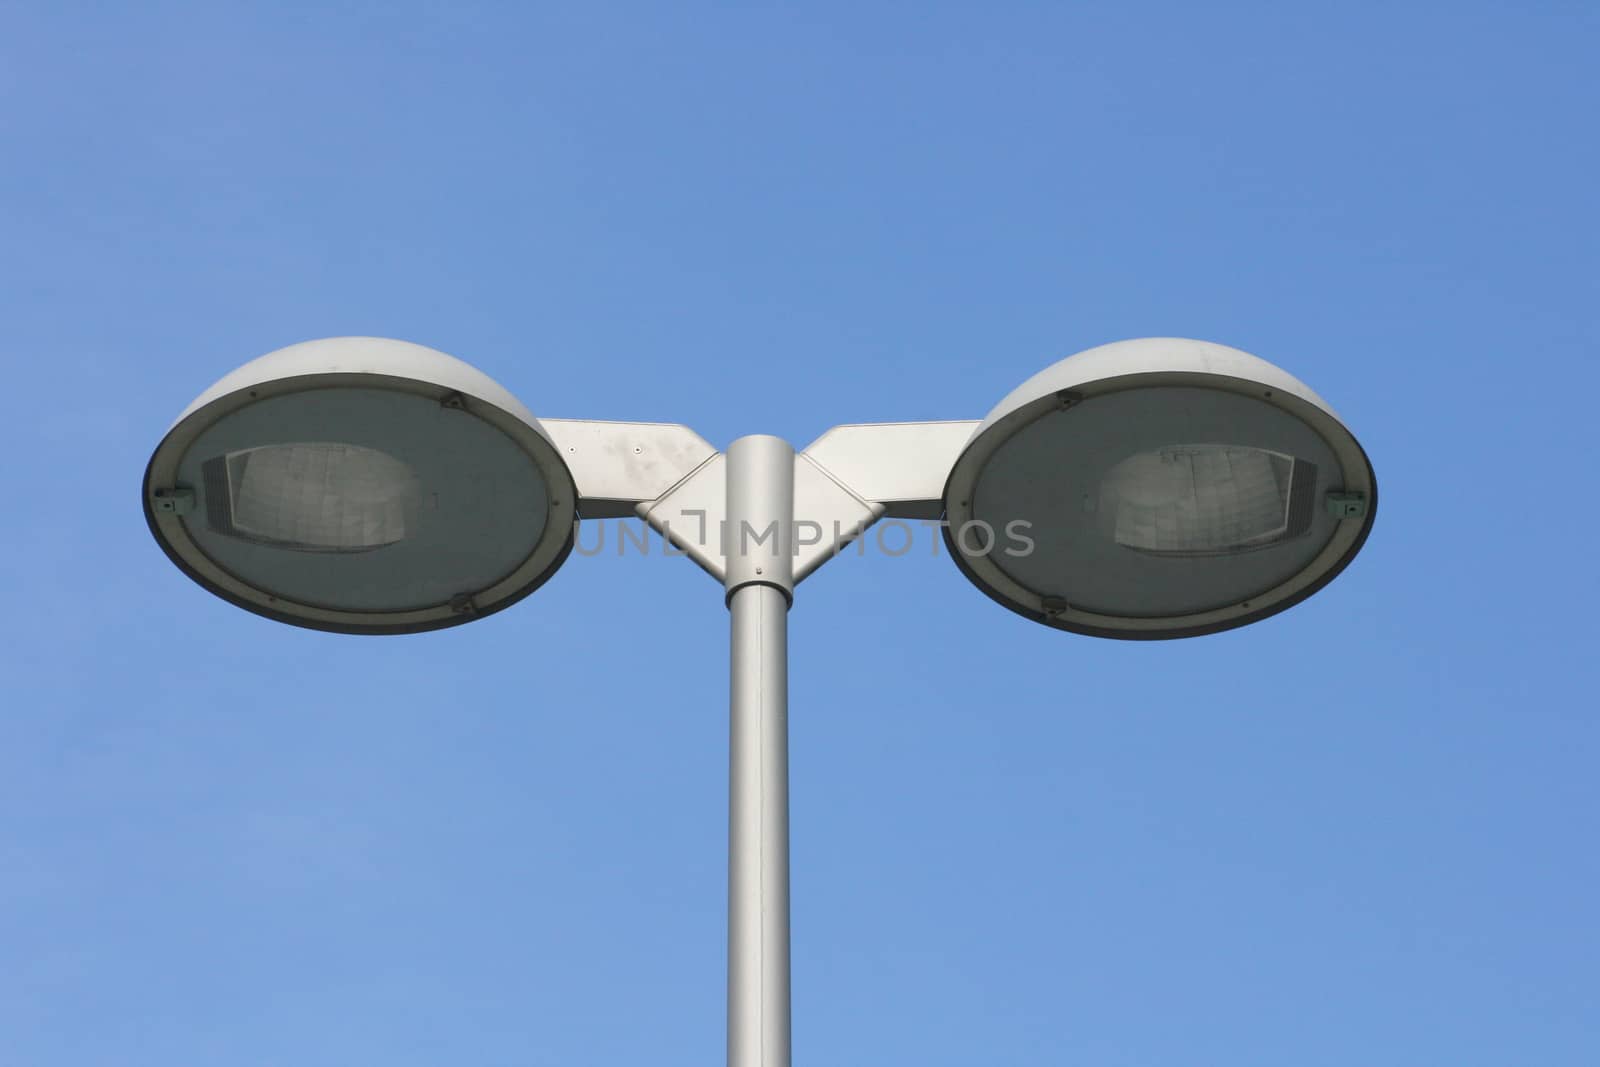 Street light with two lamps, blue sky in the background  Stra�enlaterne mit zwei Strahlern,blauer Himmel im Hintergrund